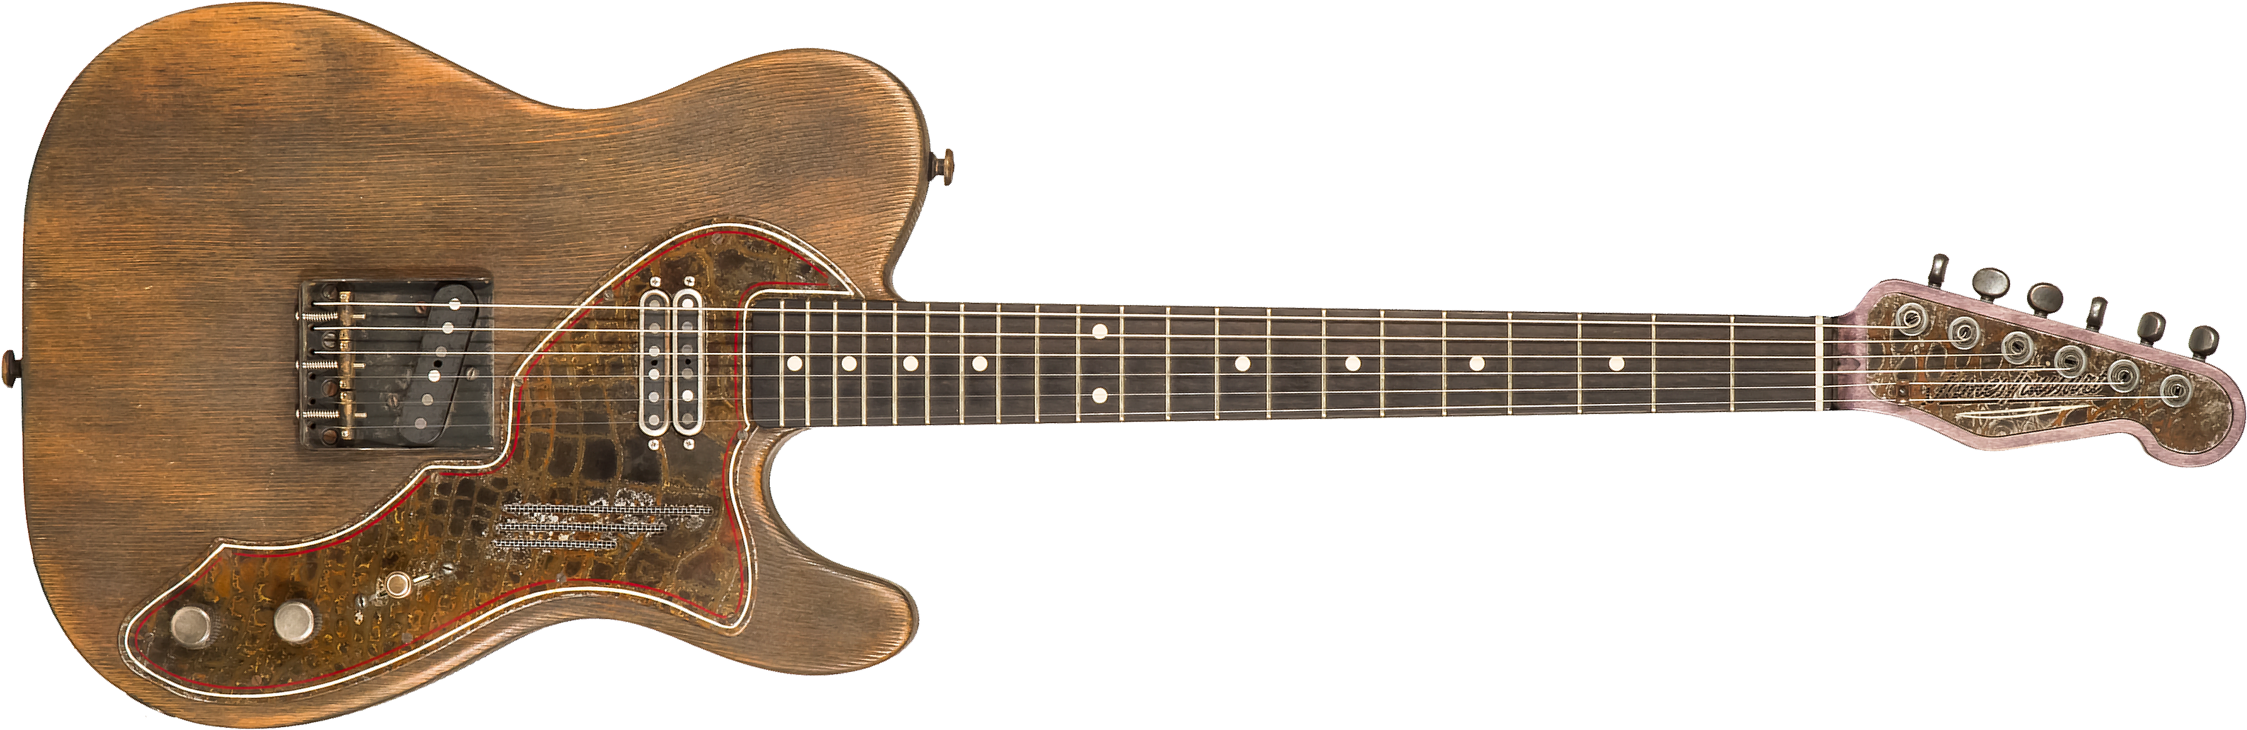 James Trussart Steelguard Caster Sugar Pine Sh Eb #18035 - Rust O Matic Gator Grey Driftwood - Guitarra eléctrica con forma de tel - Main picture